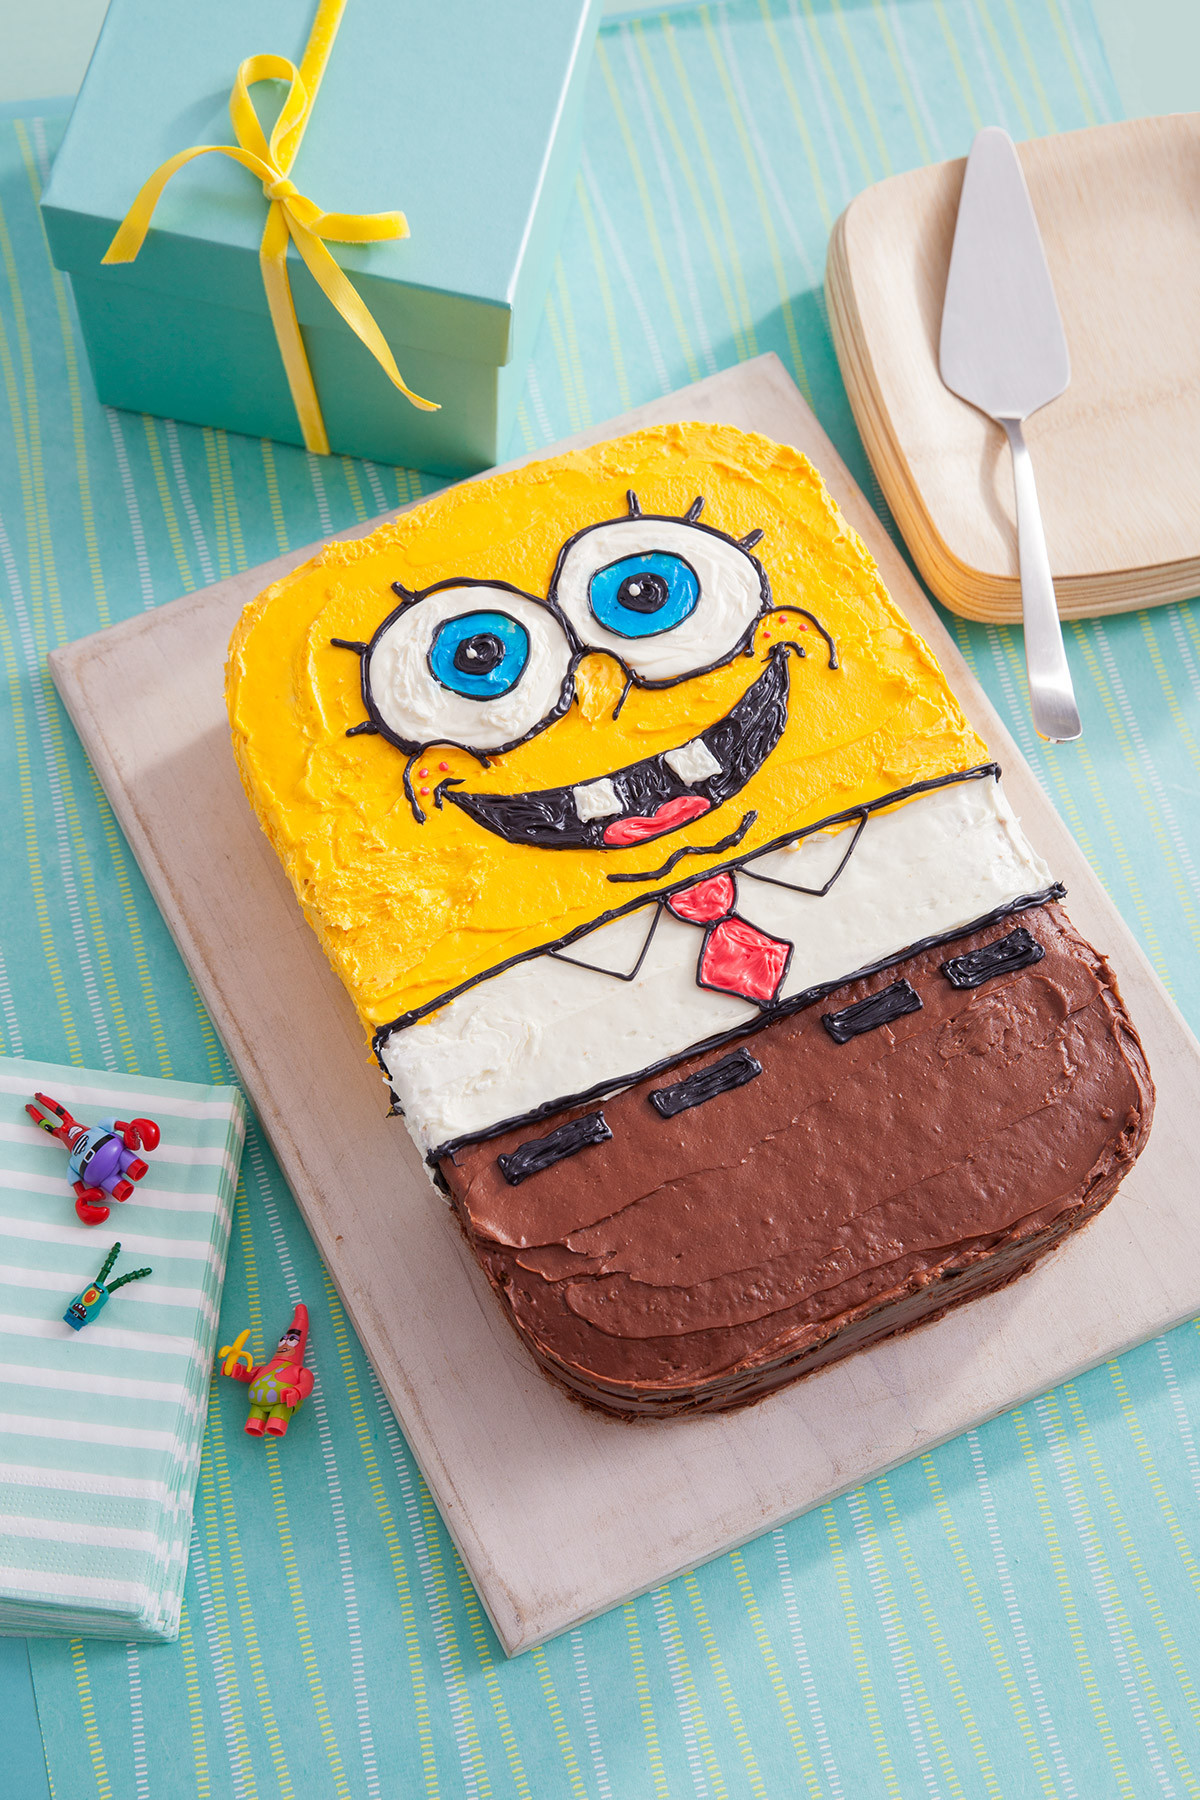 Spongebob Birthday Cakes
 SpongeBob Birthday Cake Recipe